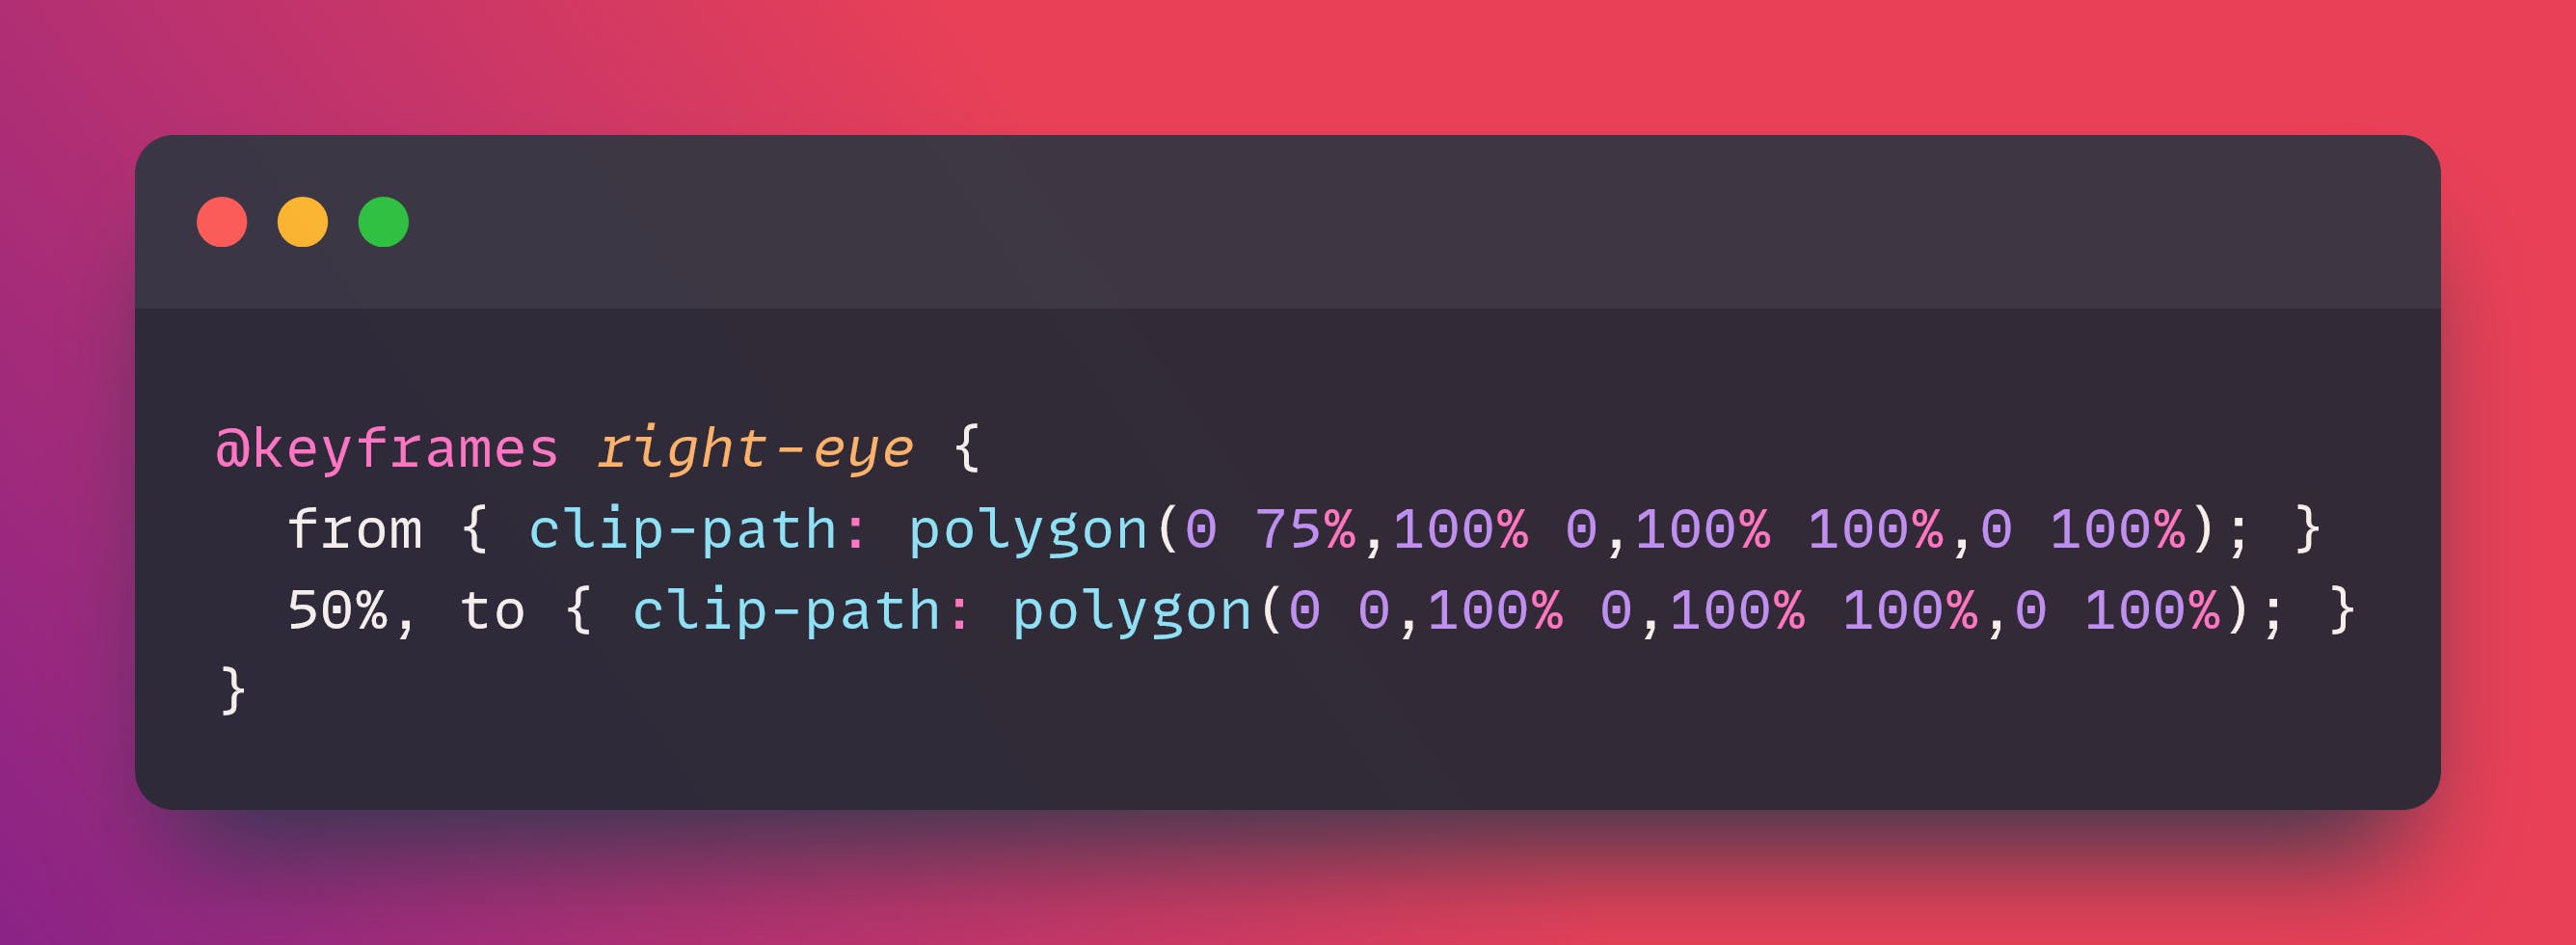 @keyframes right-eye {
	from { clip-path: polygon(0 75%,100% 0,100% 100%,0 100%); }
	50%, to { clip-path: polygon(0 0,100% 0,100% 100%,0 100%); }
}